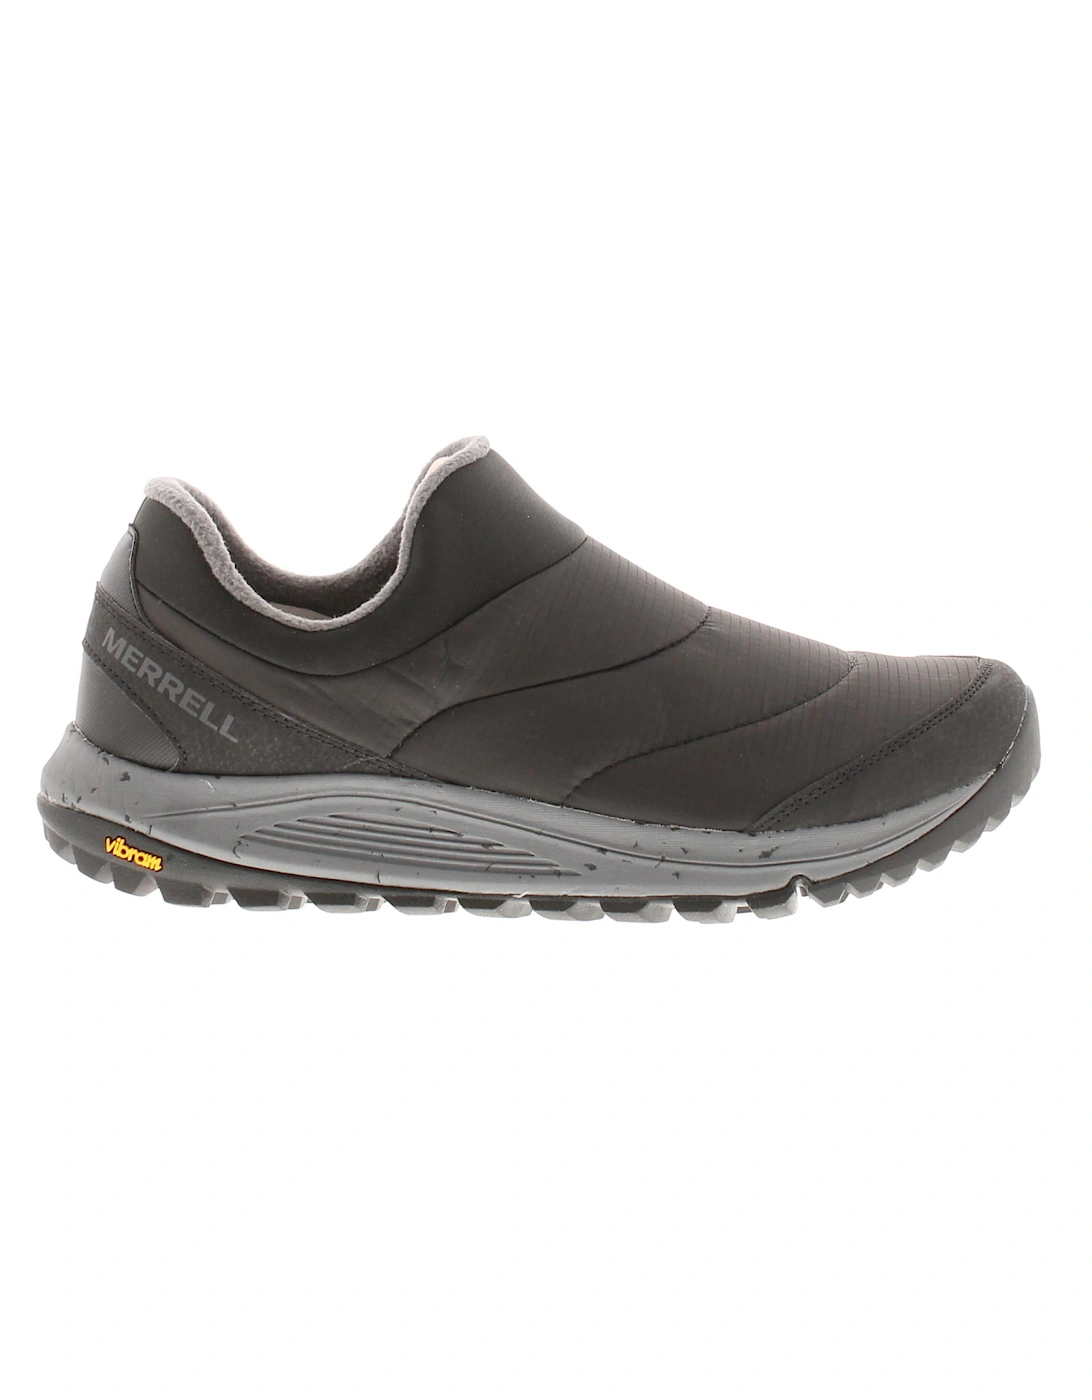 Mens Walking Boots Nova Sneaker Moc Slip On black UK Size